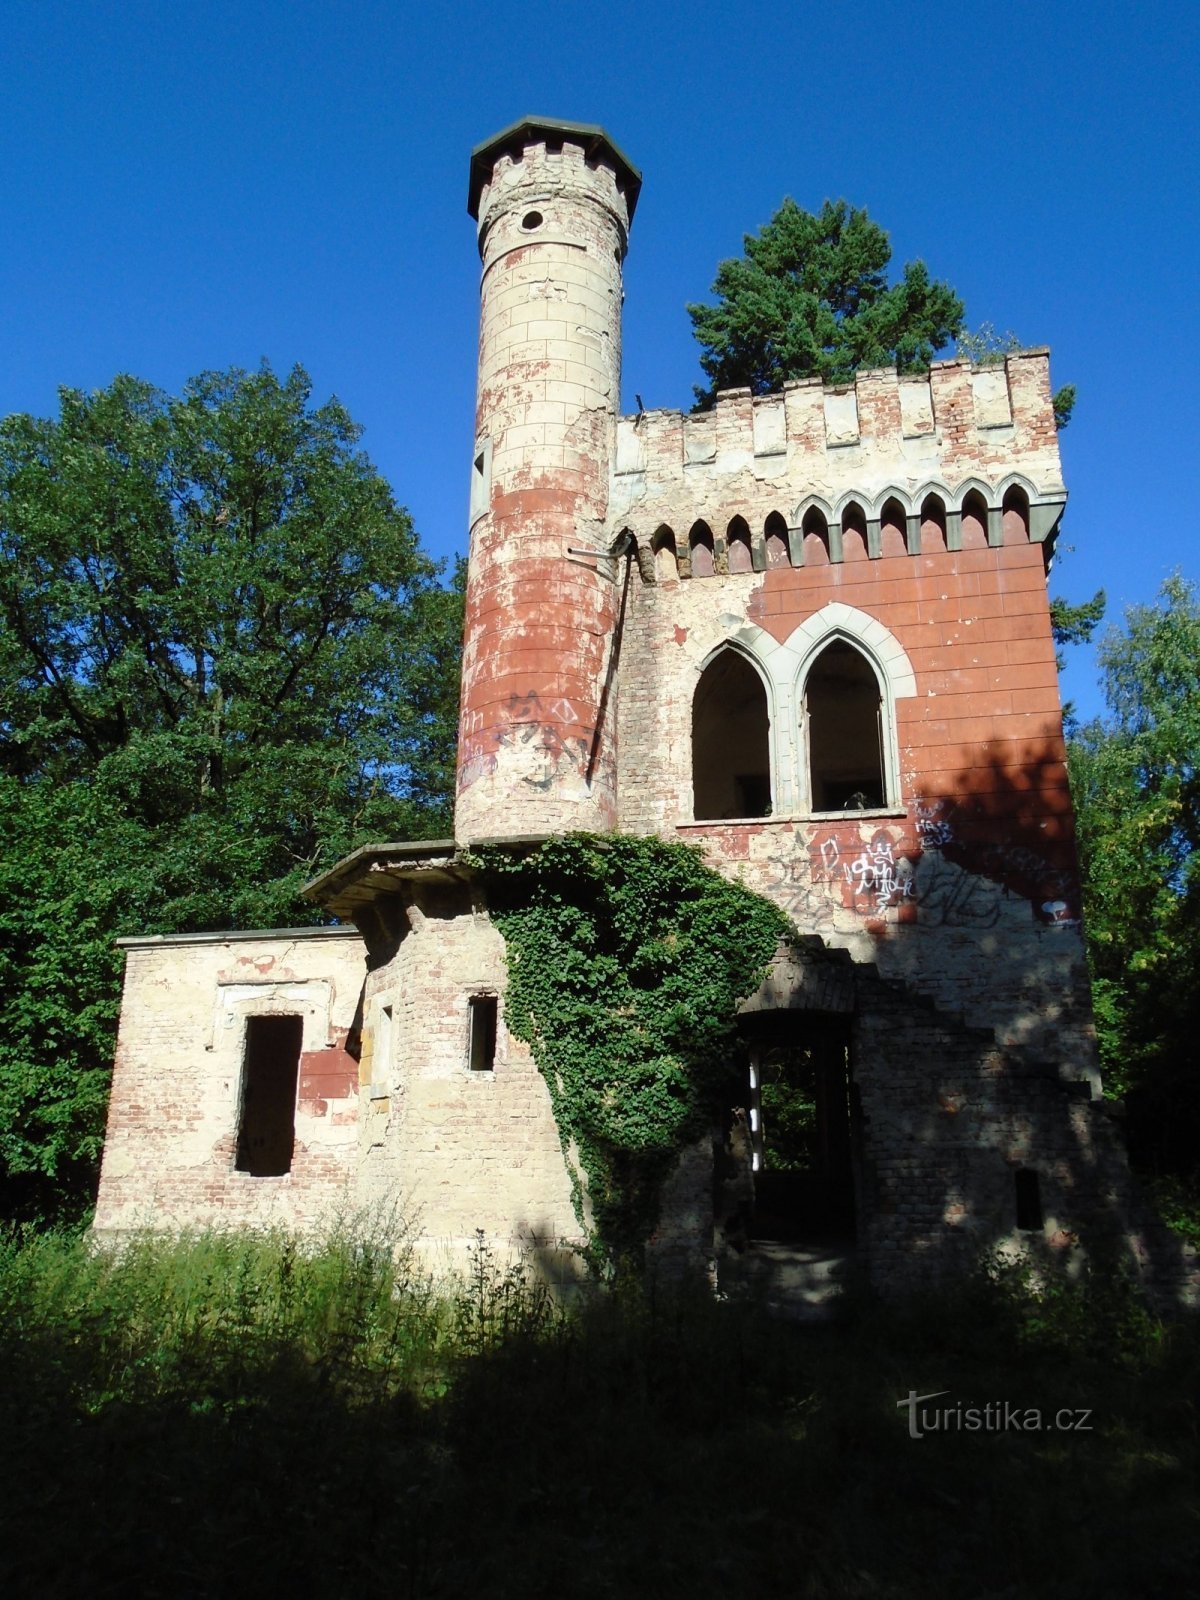 Weinrich summer castle (Rohoznice)